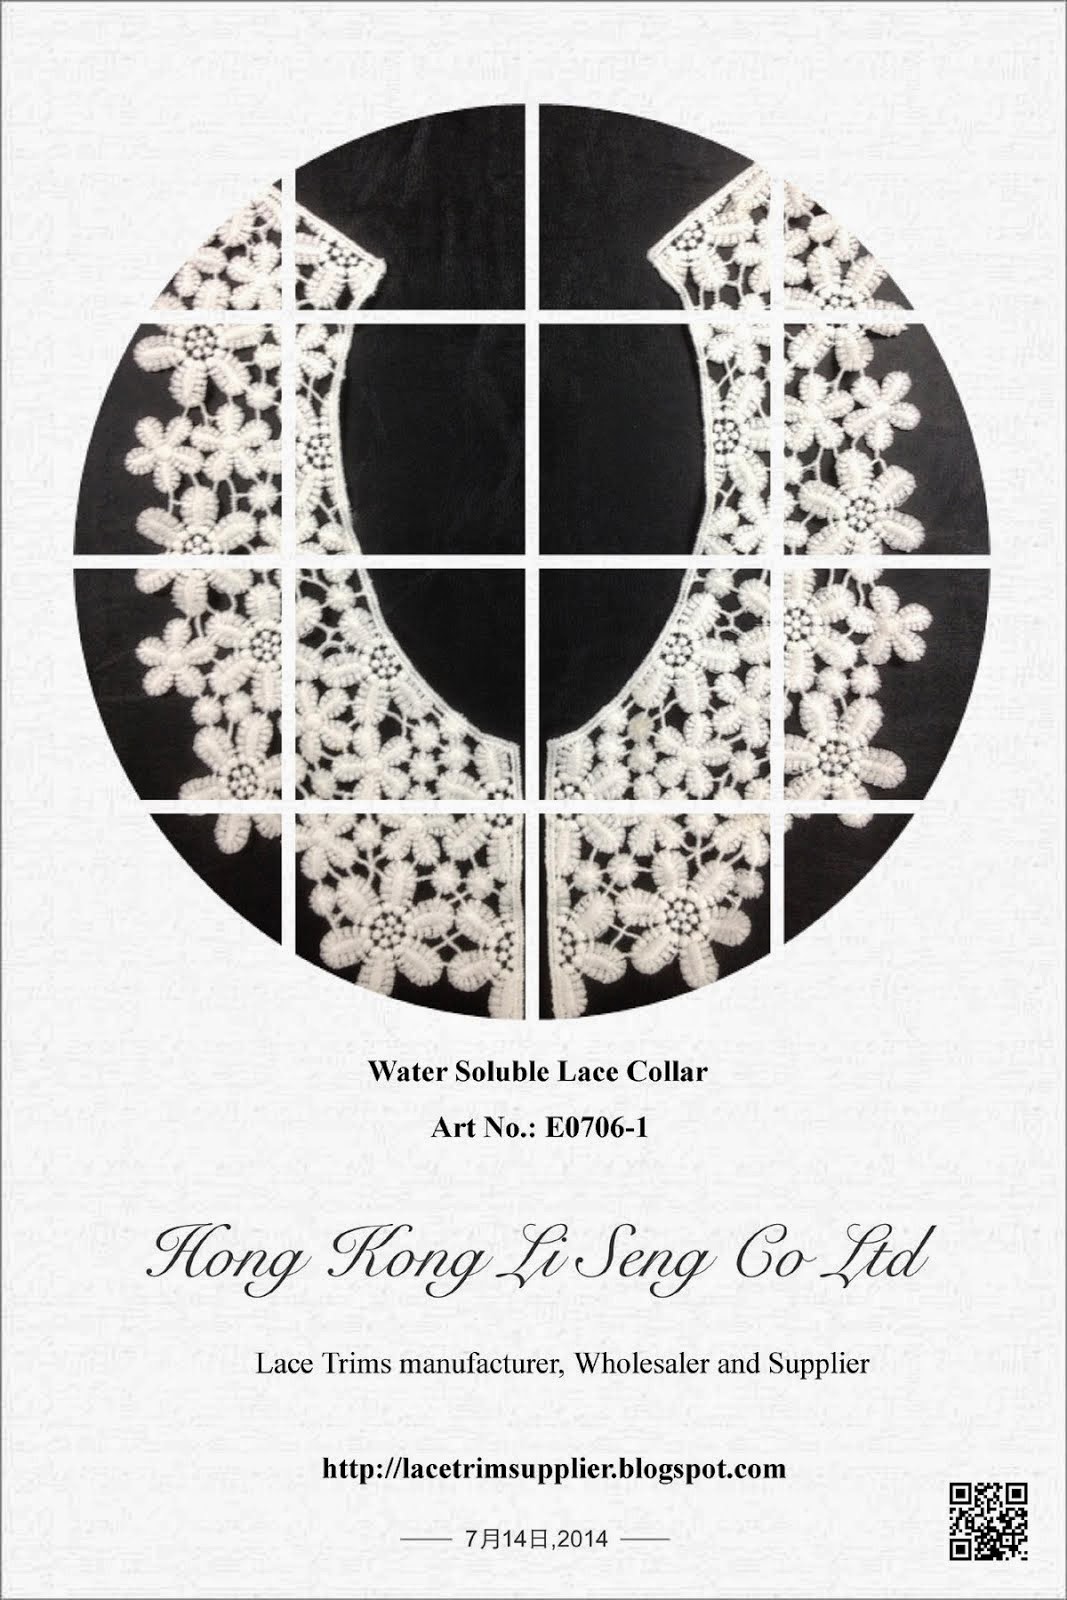 Water Soluble Lace Collar Manufacturer Wholesaler and Supplier " Hong Kong Li Seng Co Ltd "